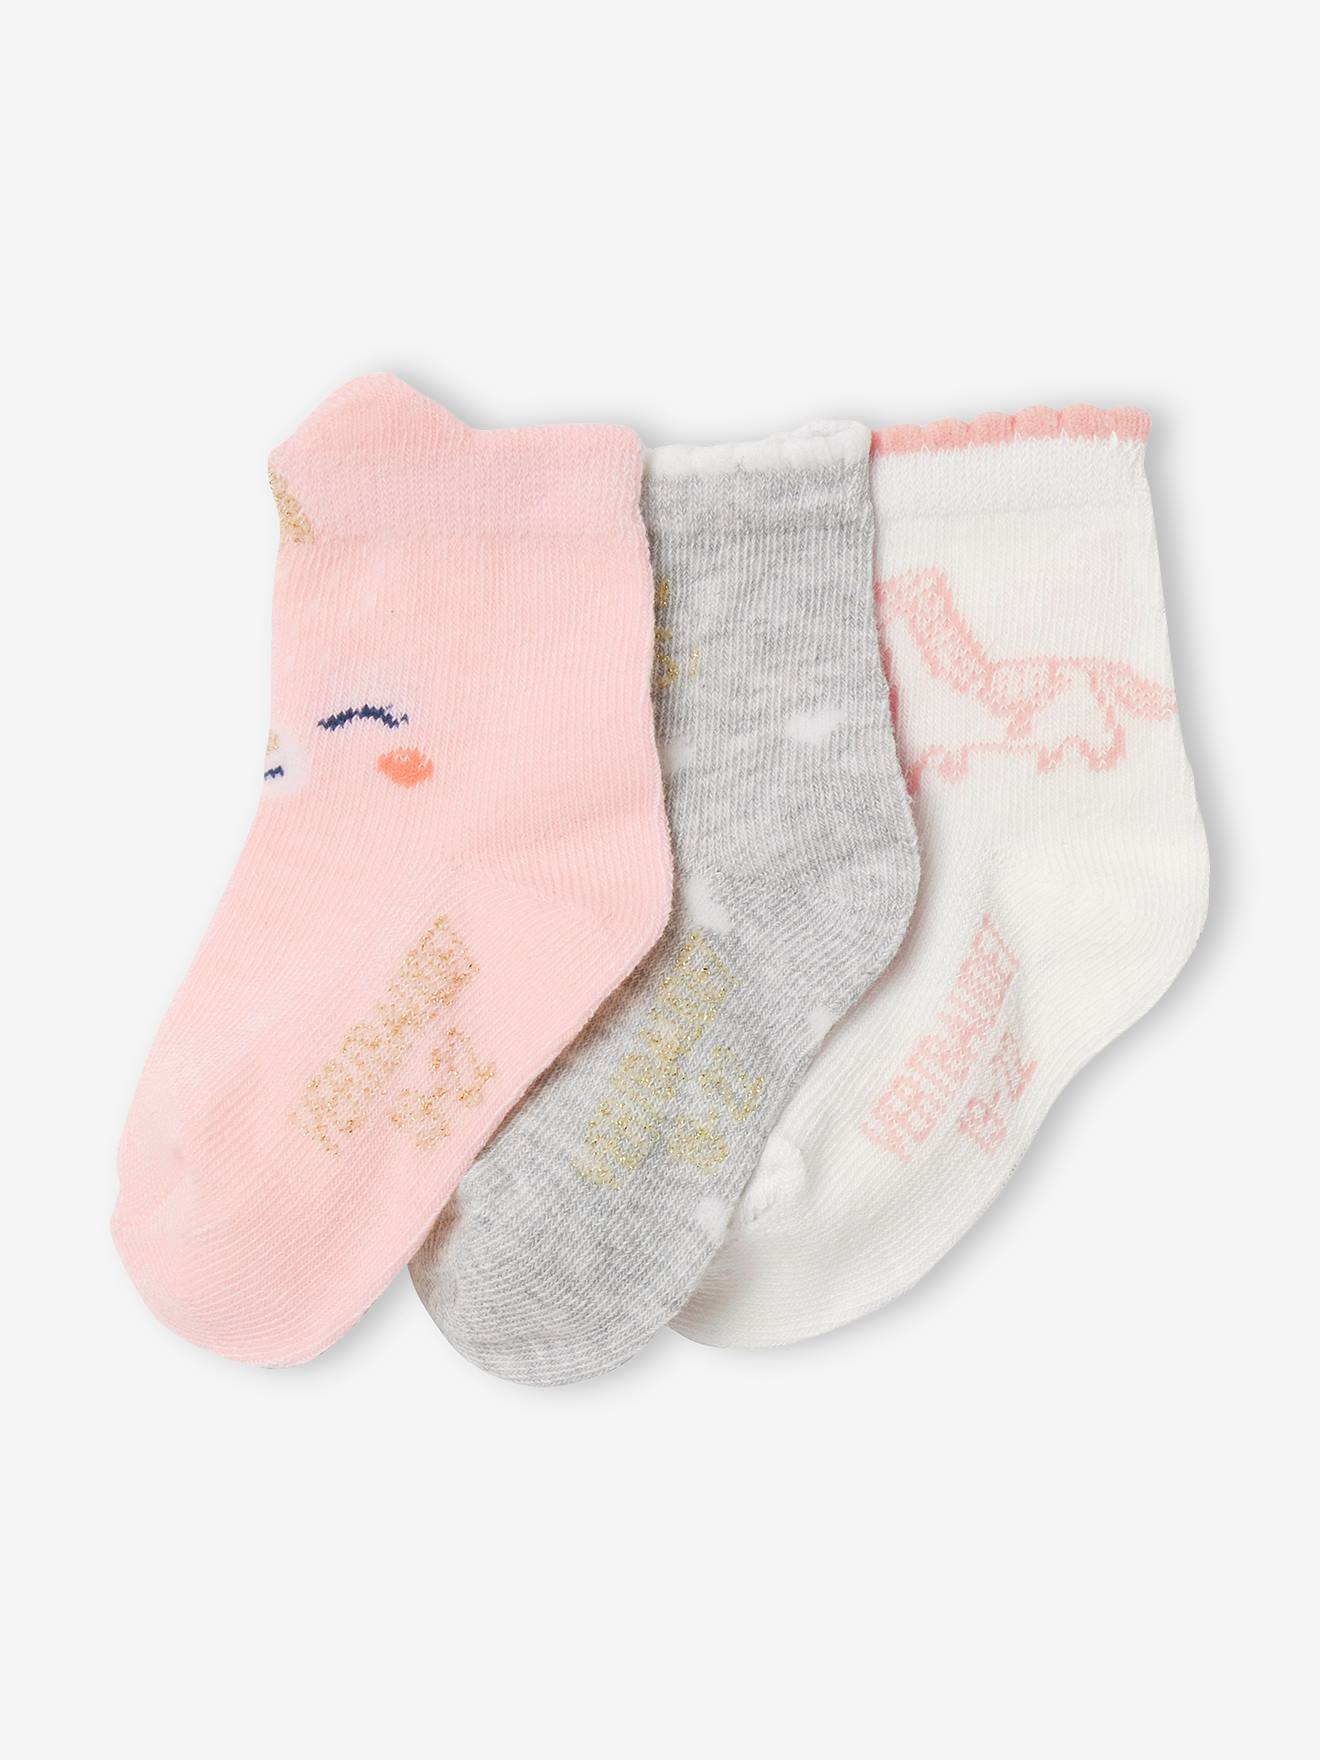 3 Years 3 Pairs Baby Toddler Girls Kids Cotton Soft Fun Cute Socks 9 Months 